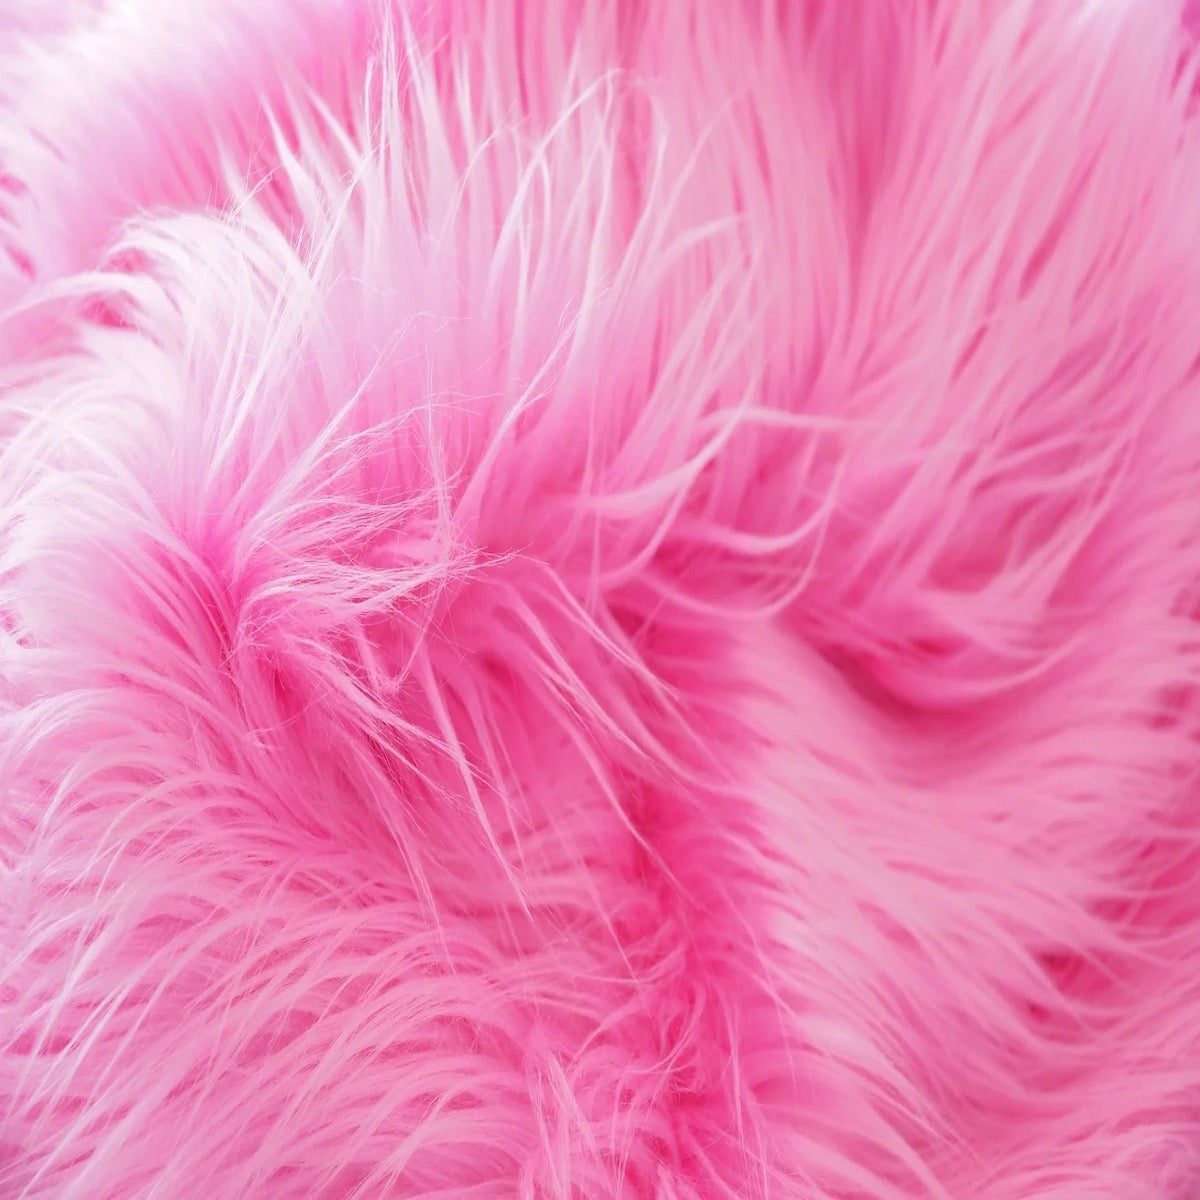 Luxury Shag FurHot Pink